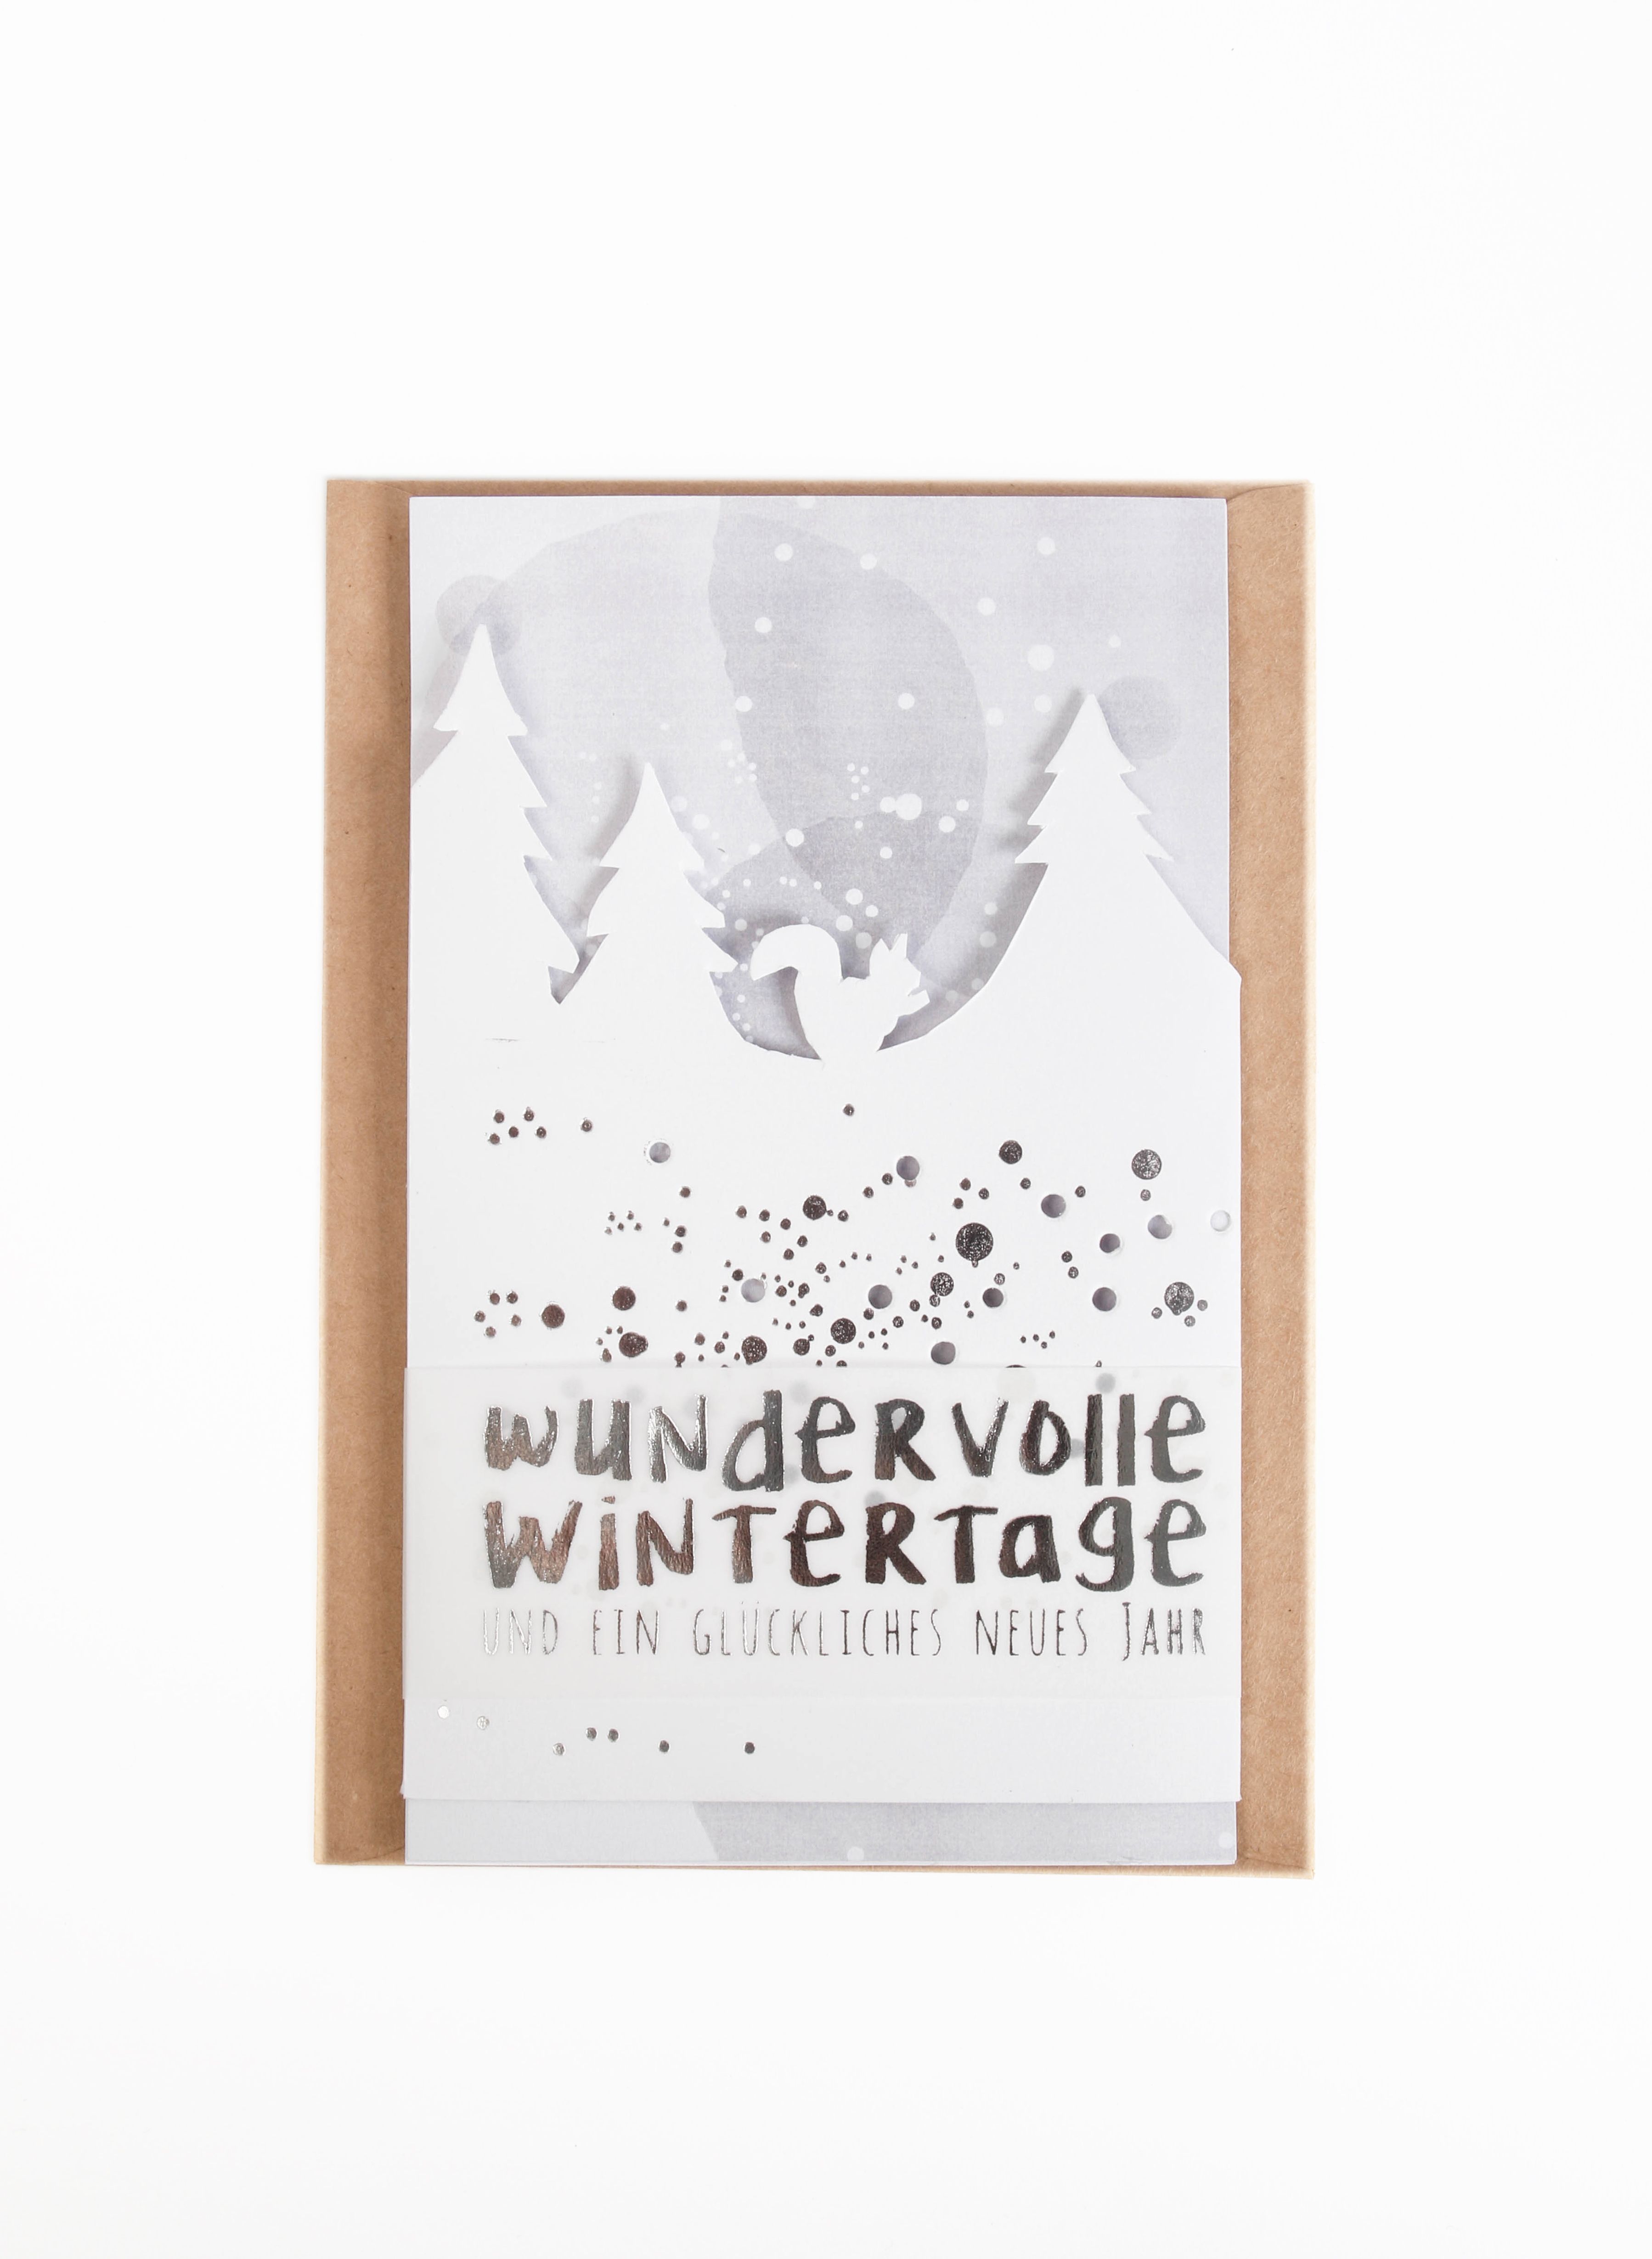 Fensterbildkarte "Wundervolle Wintertage"